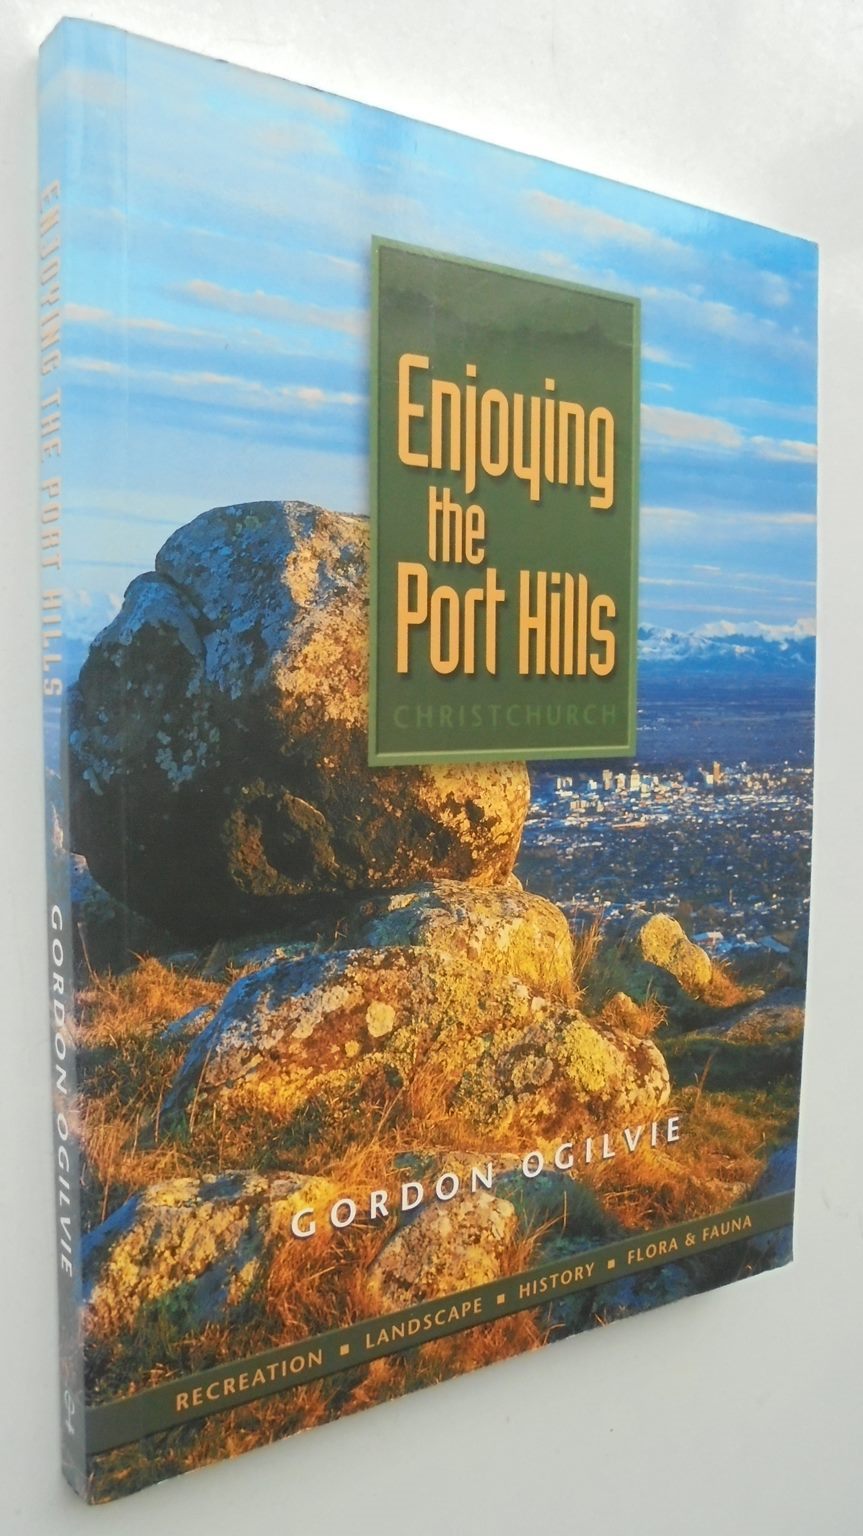 Enjoying the Port Hills By Gordon Ogilvie. SIGNED BY AUTHOR